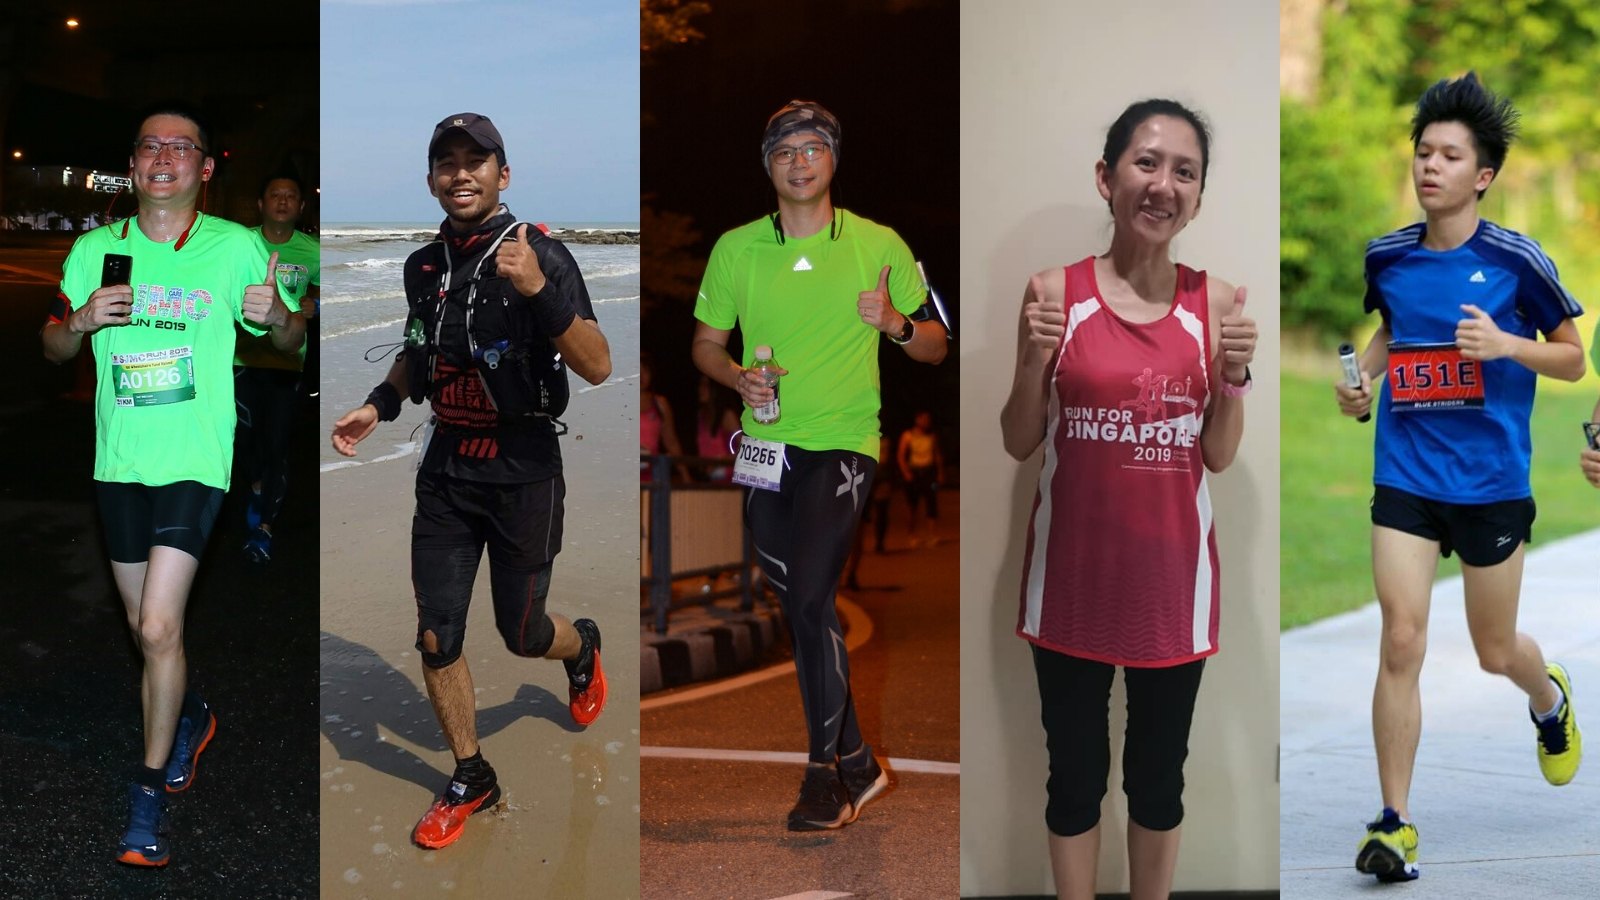 Love Penang Run 2023: The Ultimate Running Experience in PENANG 